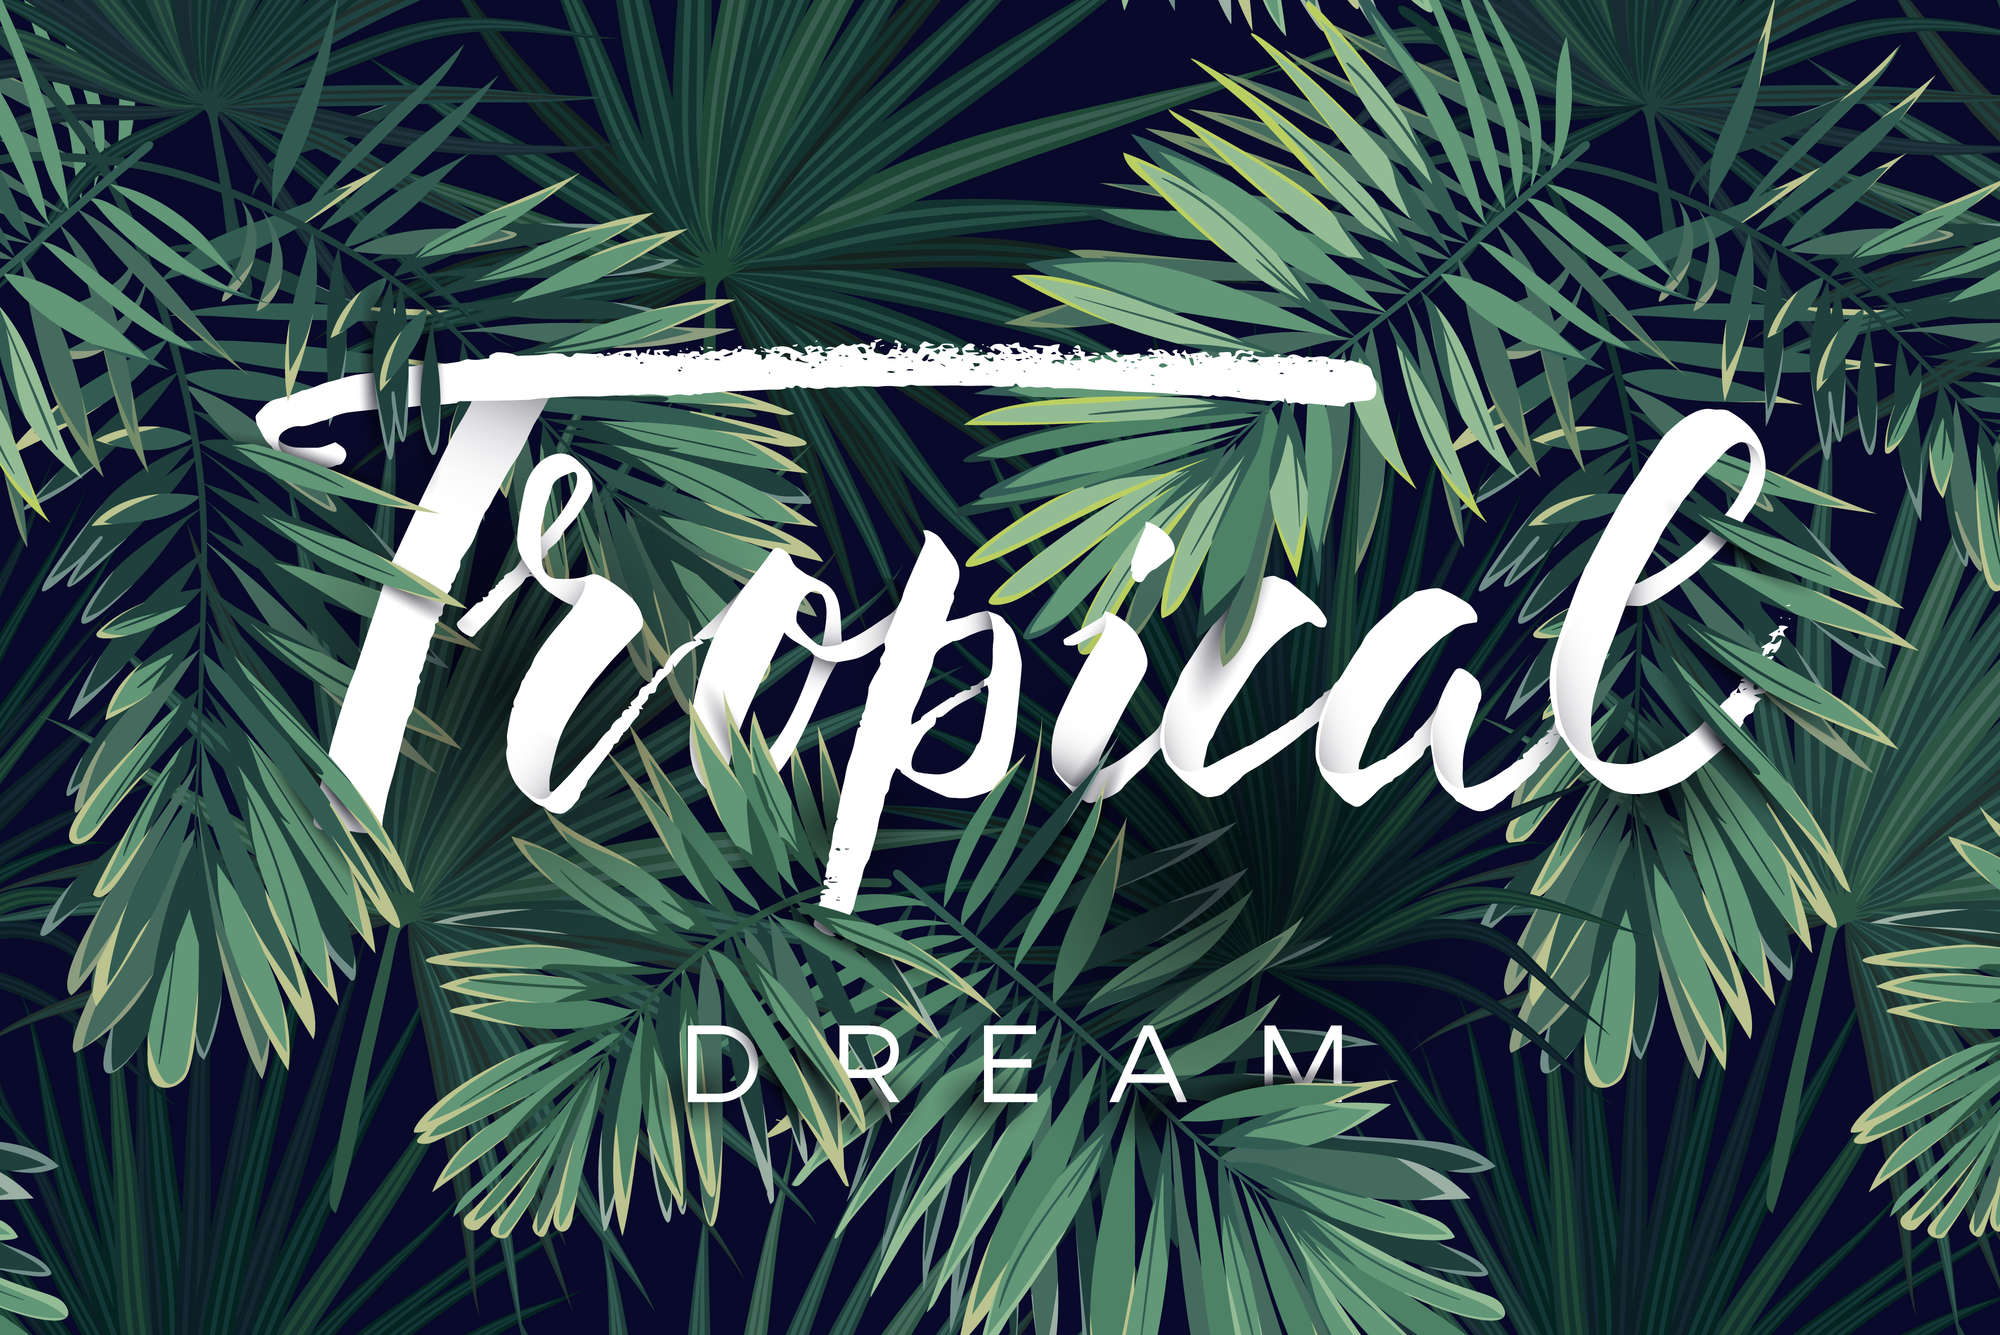             Carta da parati grafica "Tropical Dream" su pile liscio madreperlato
        